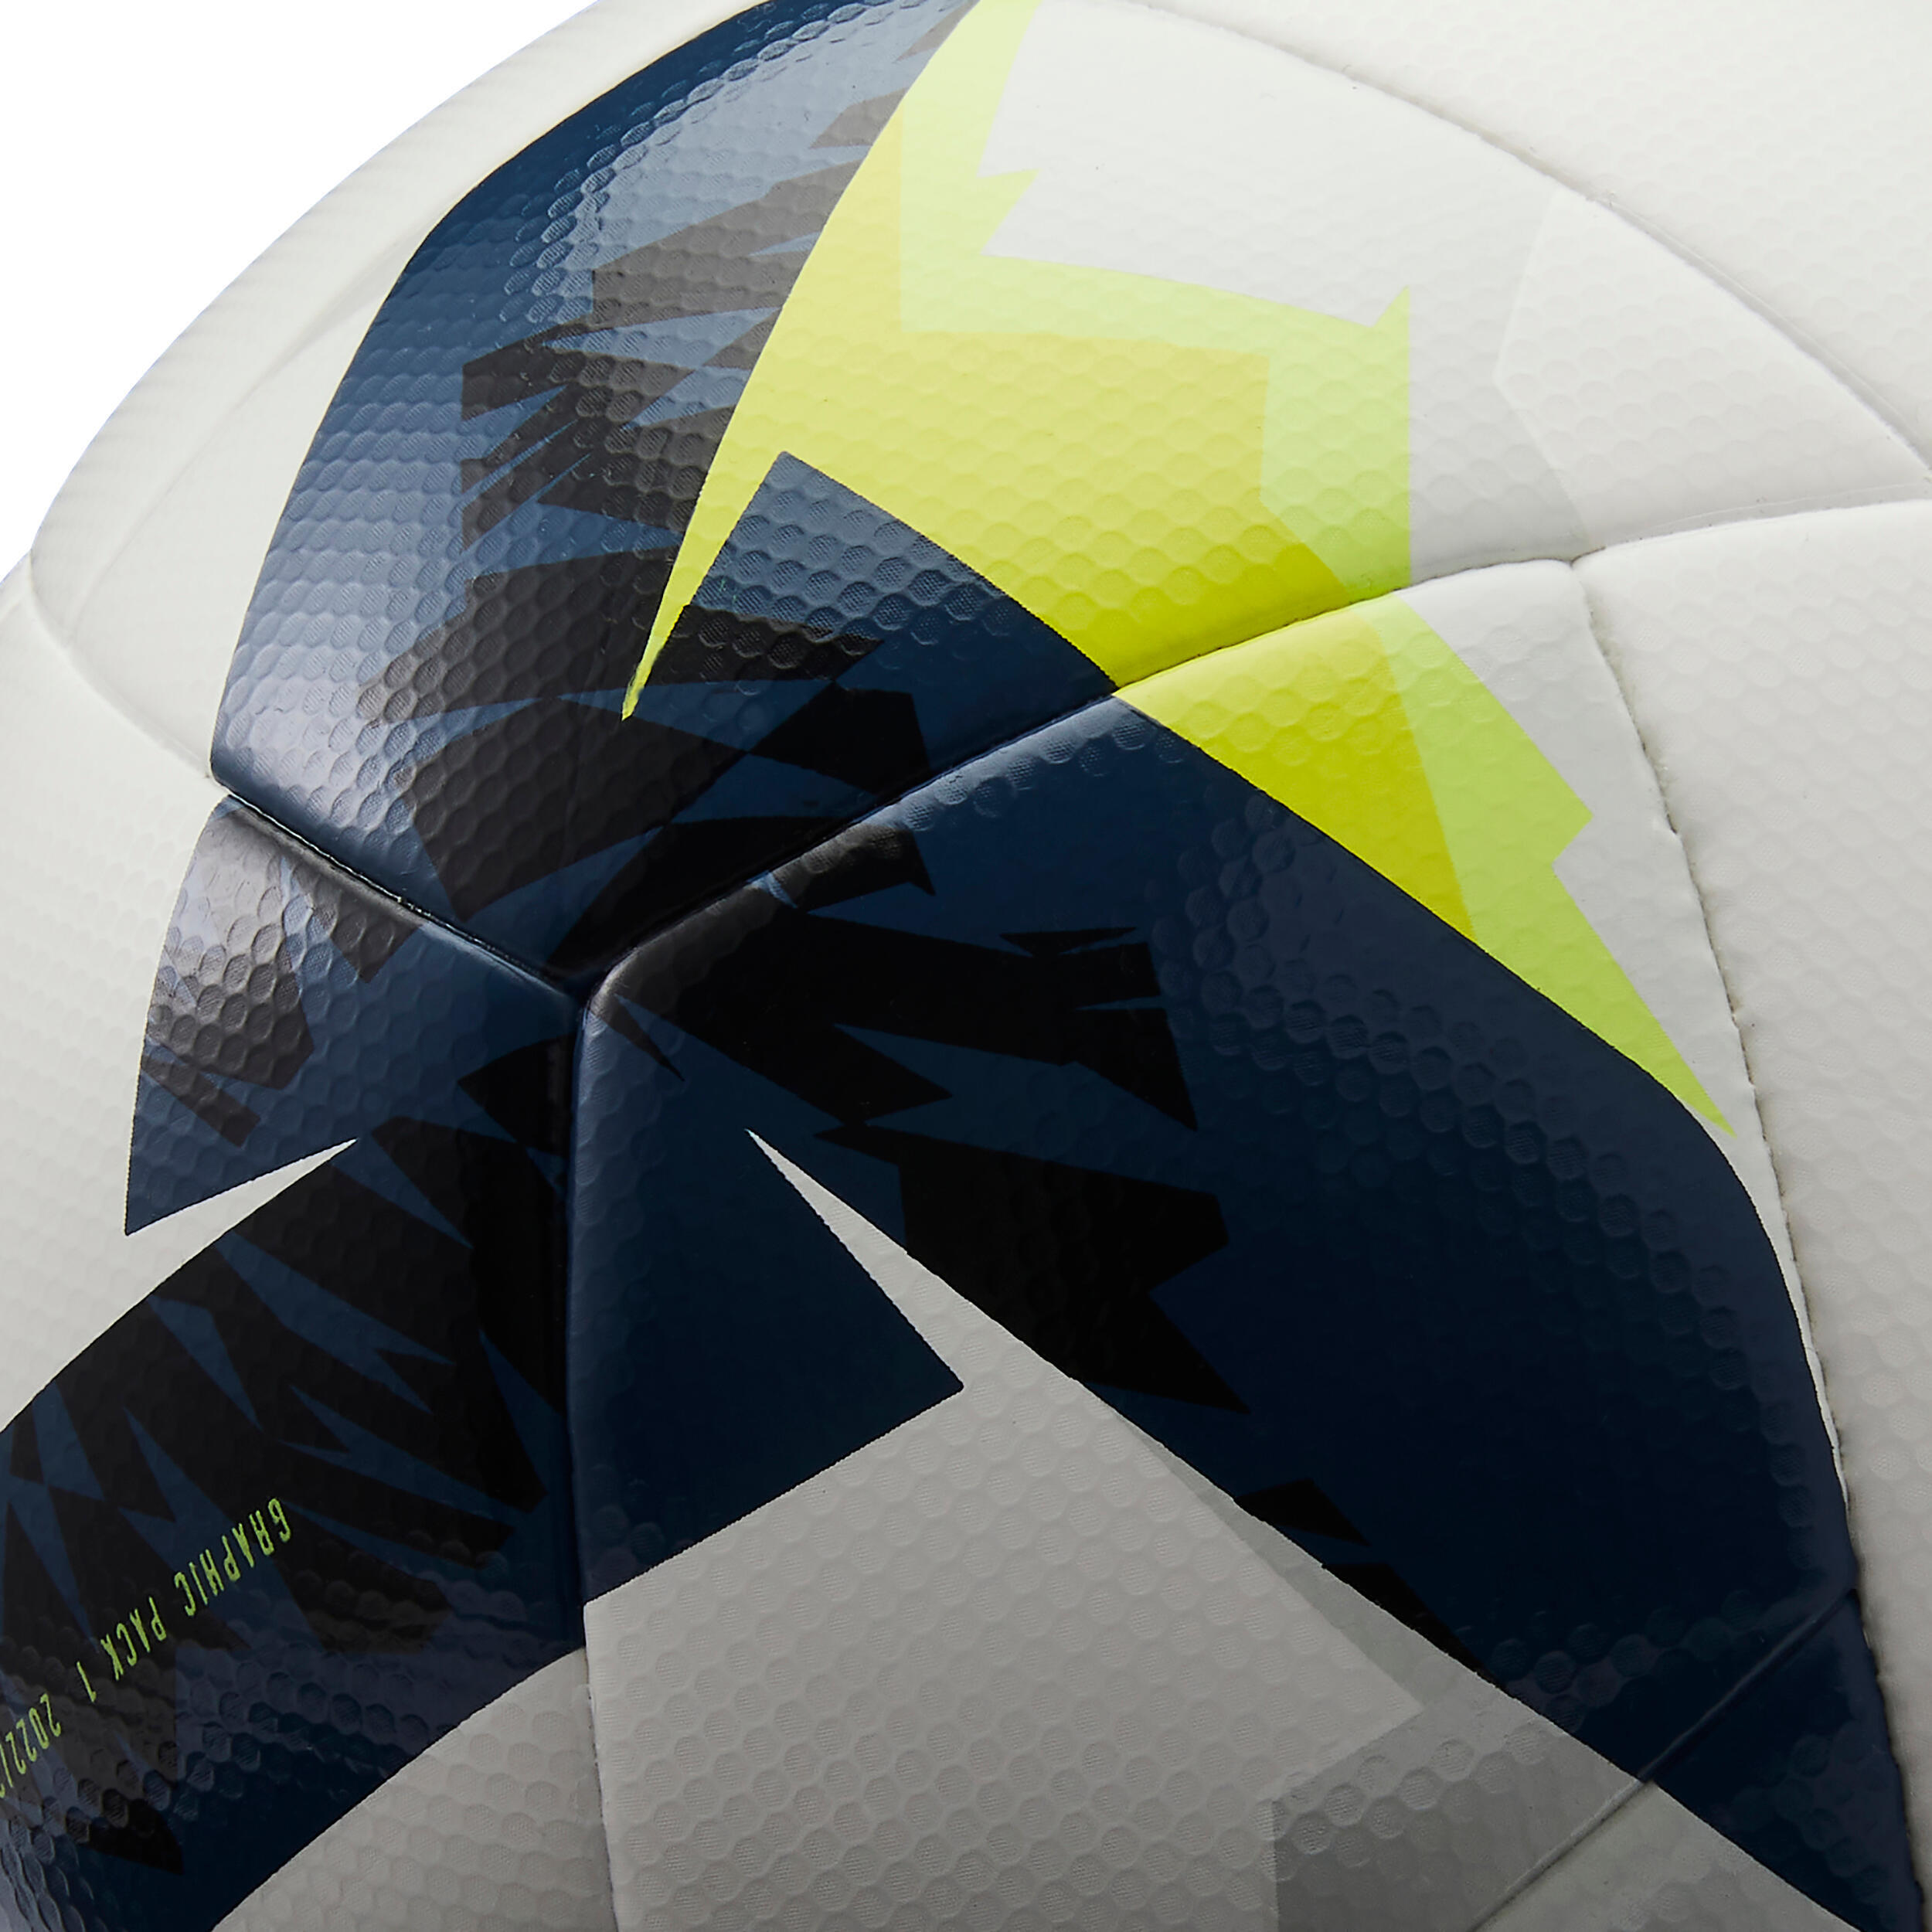 Hybrid Football FIFA Basic F550 Size 4 - White/Yellow 3/7